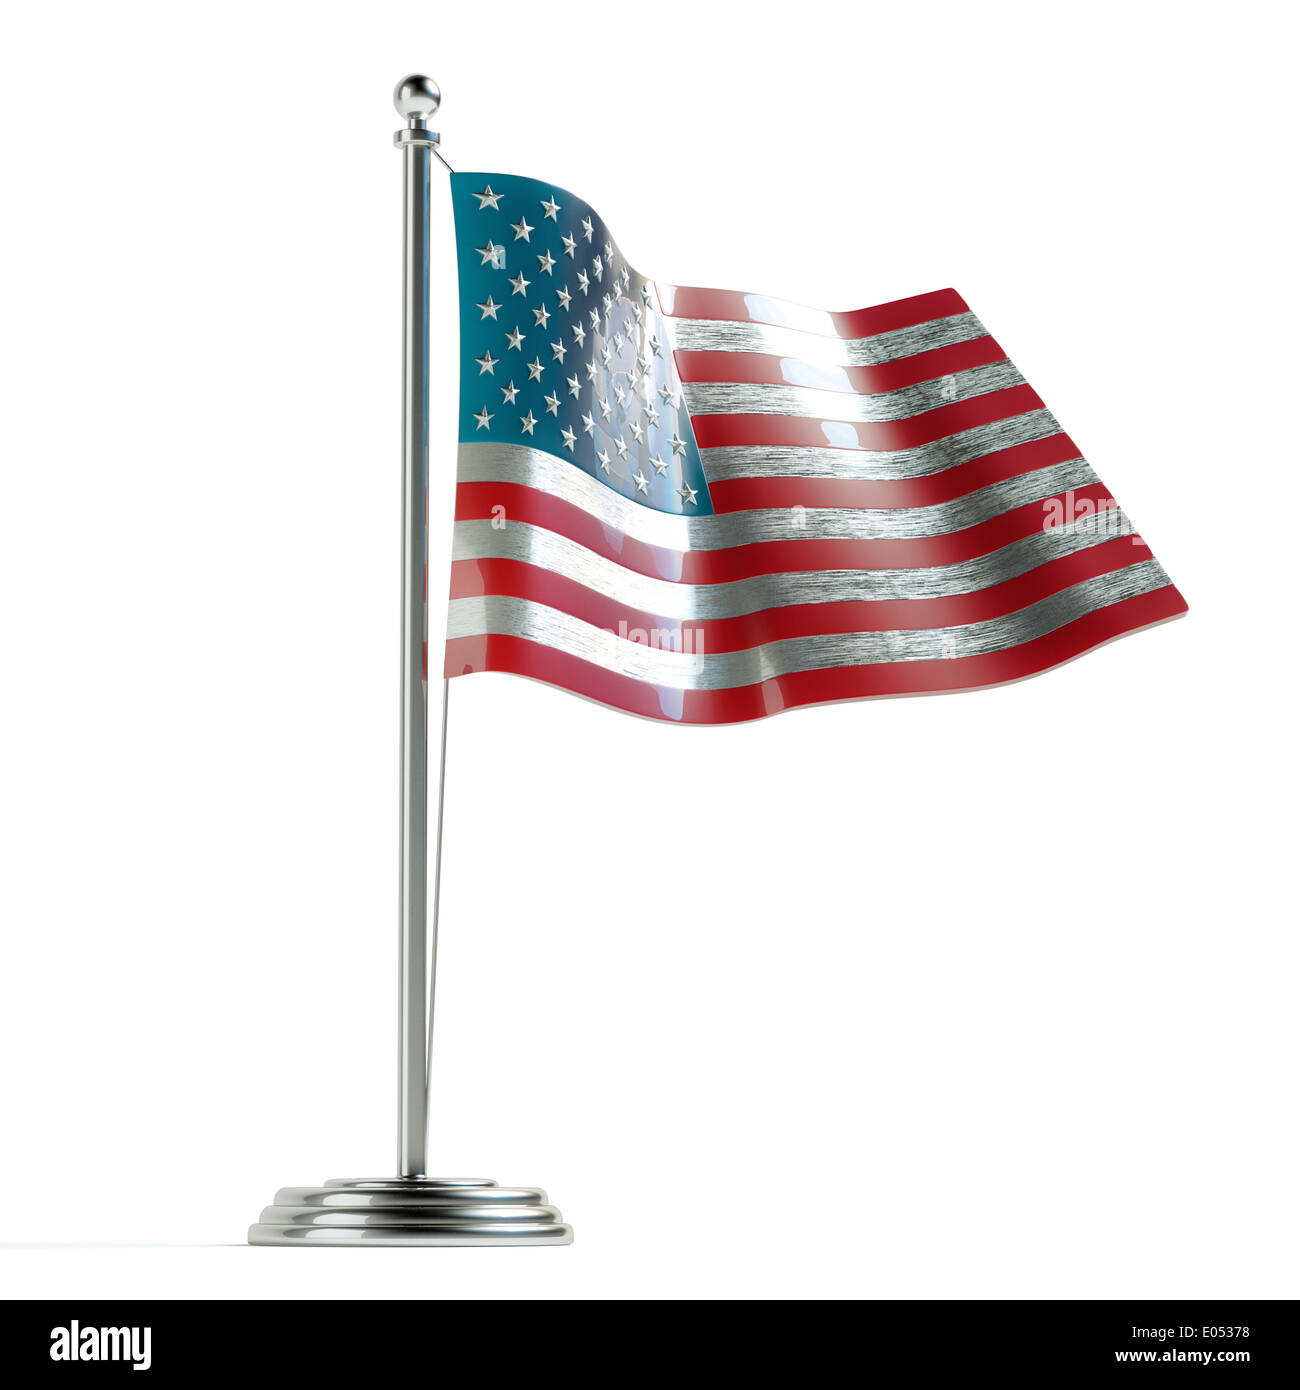 American flag 3d illustration Stock Photo